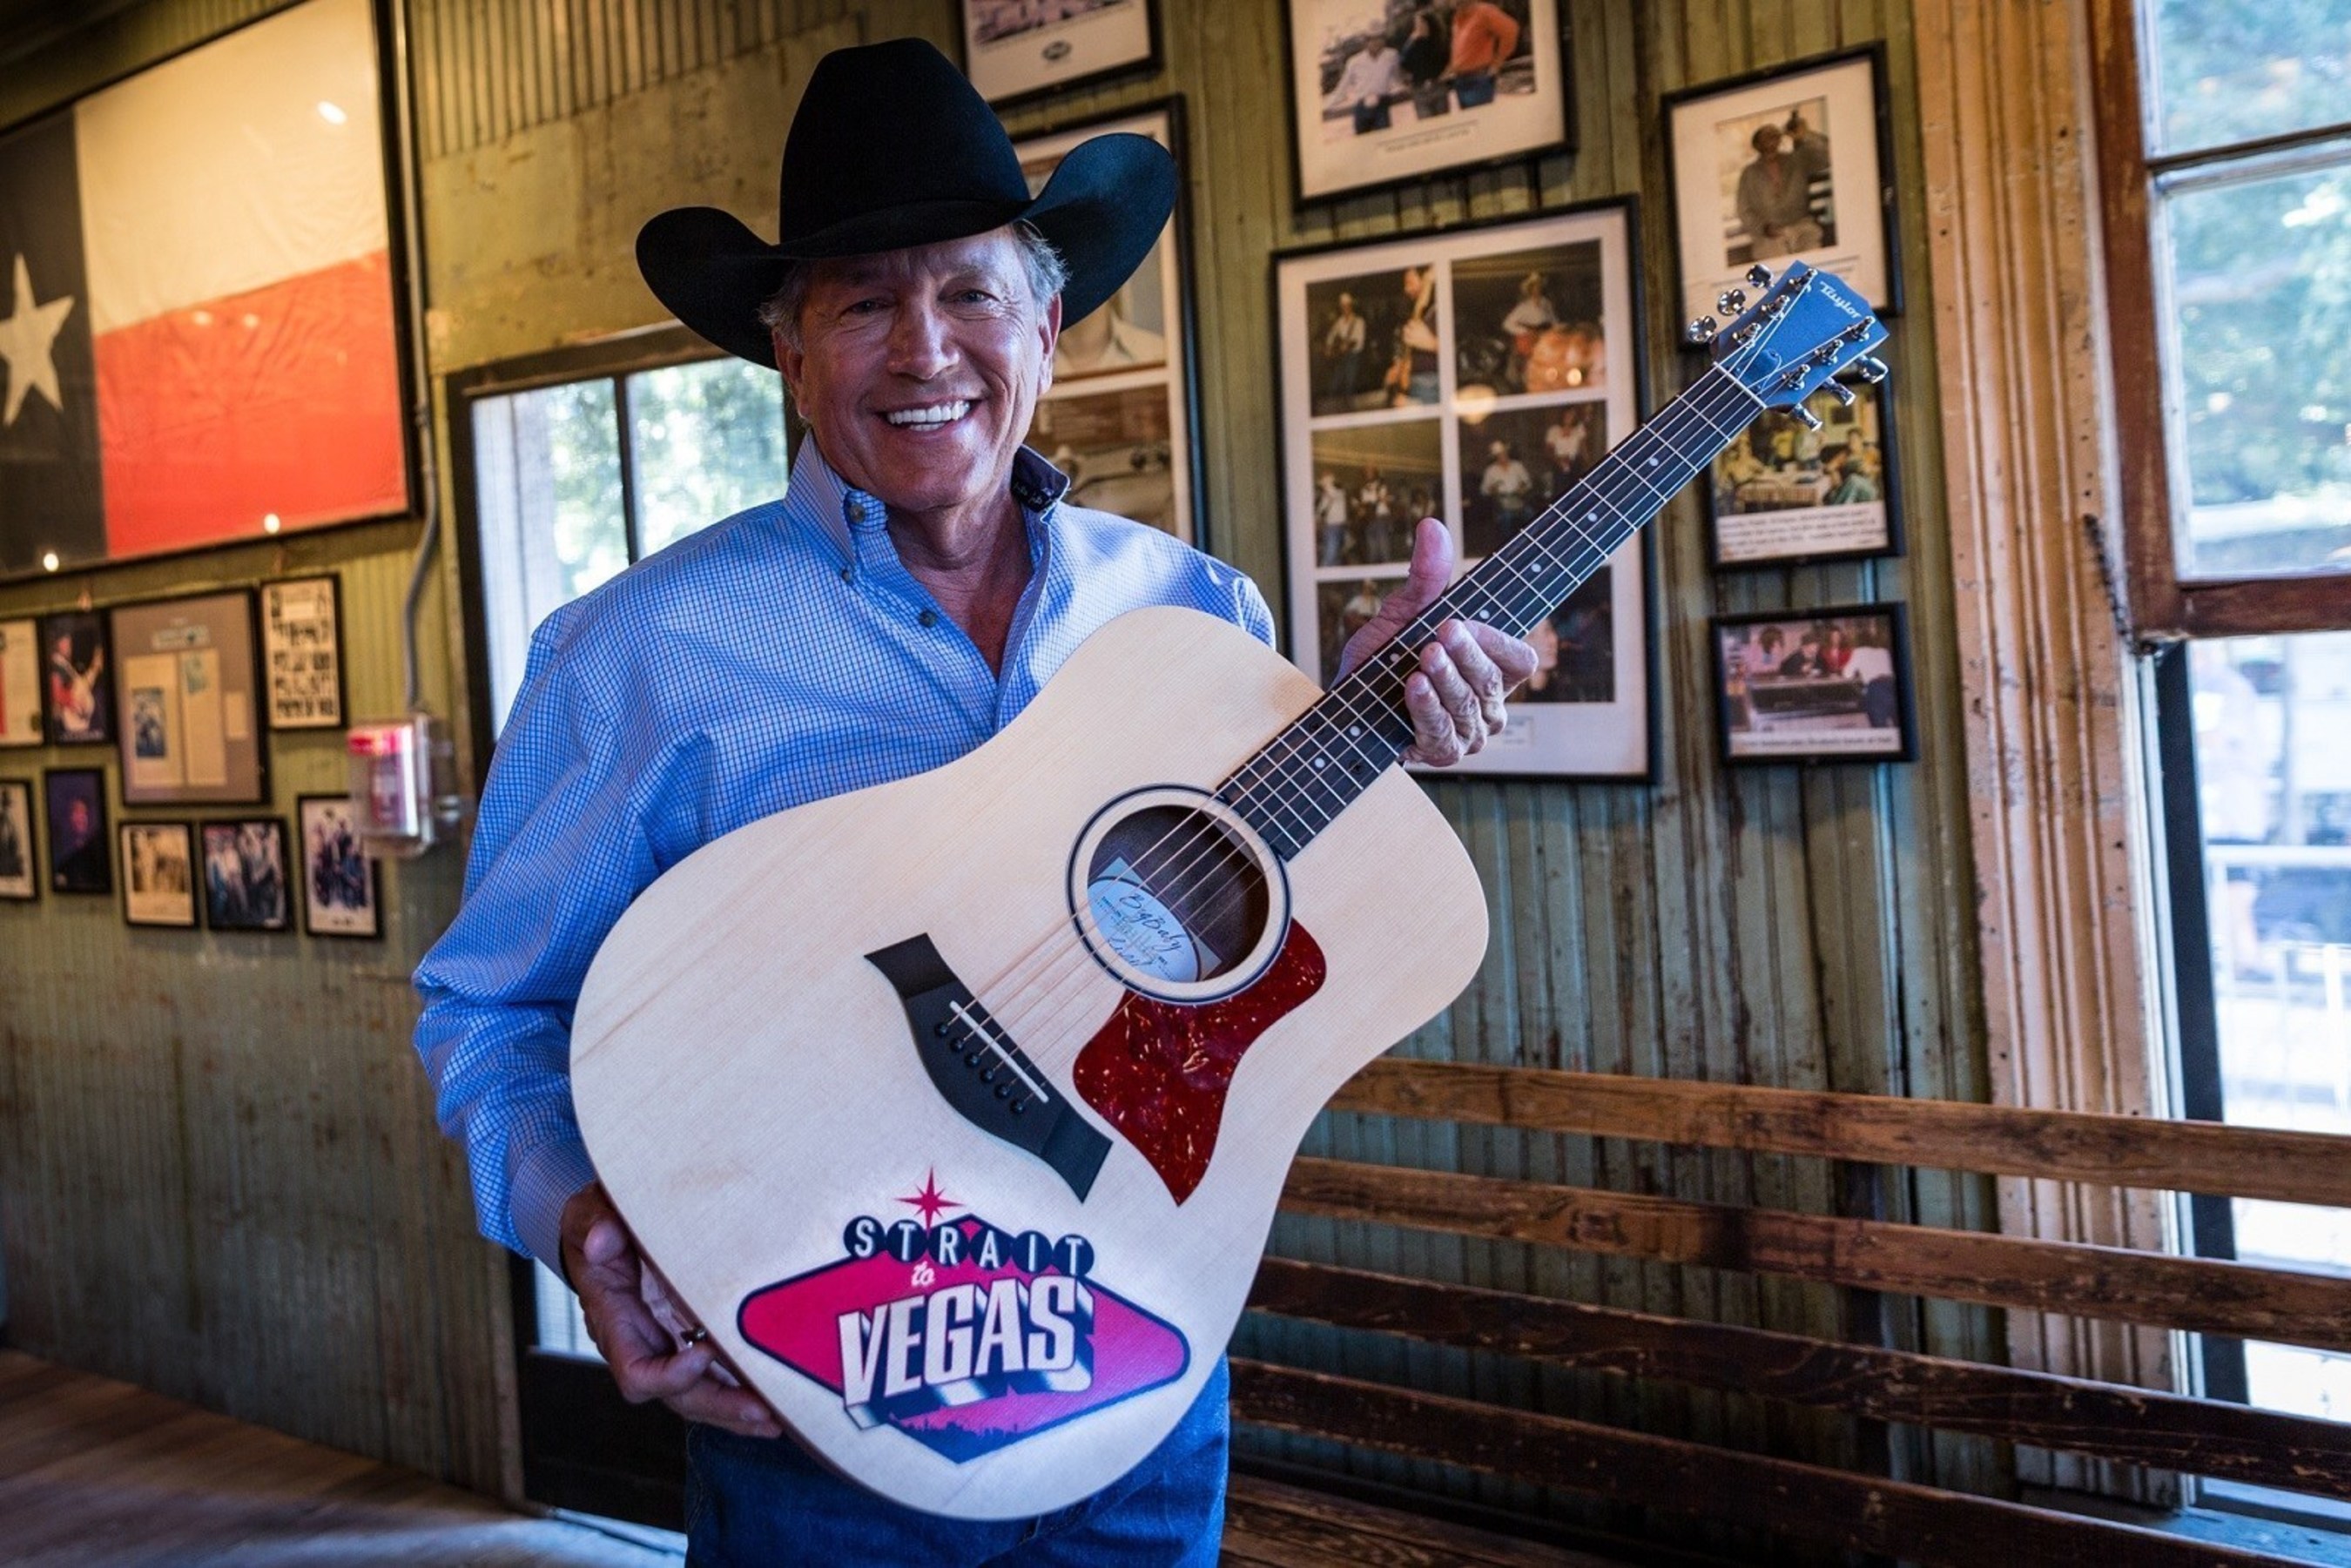 Las Vegas Presents George Strait with Custom Guitar